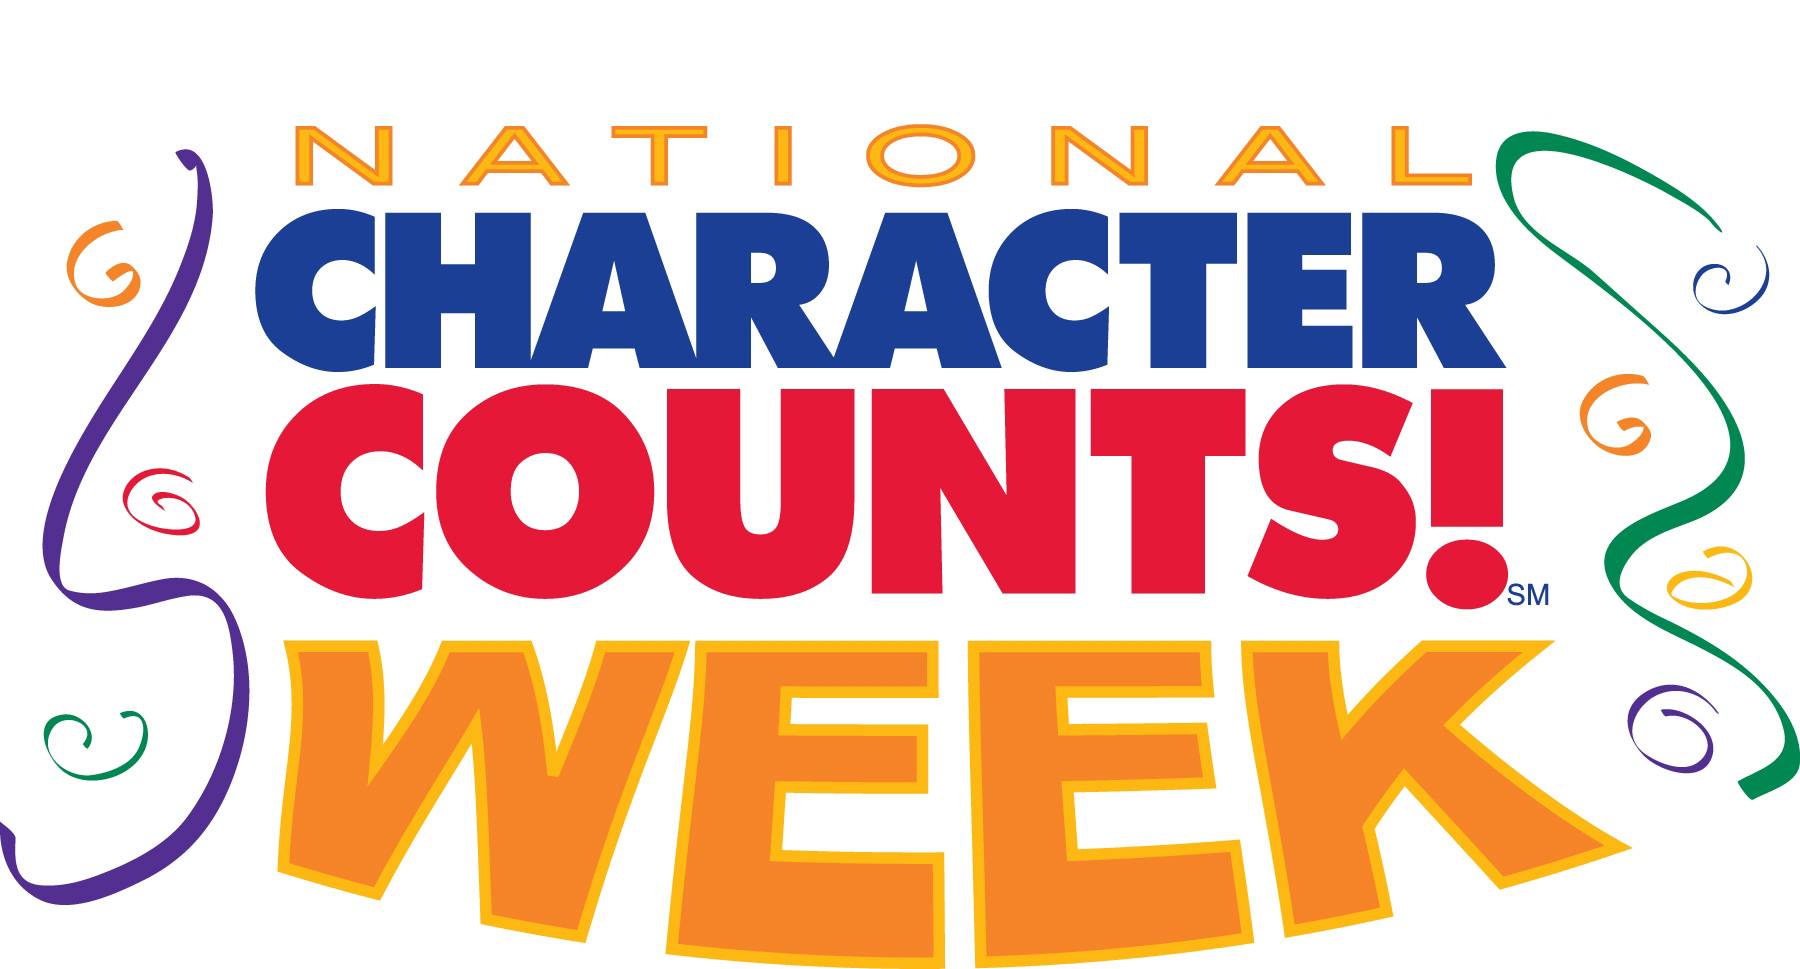 National Character Counts Week logo